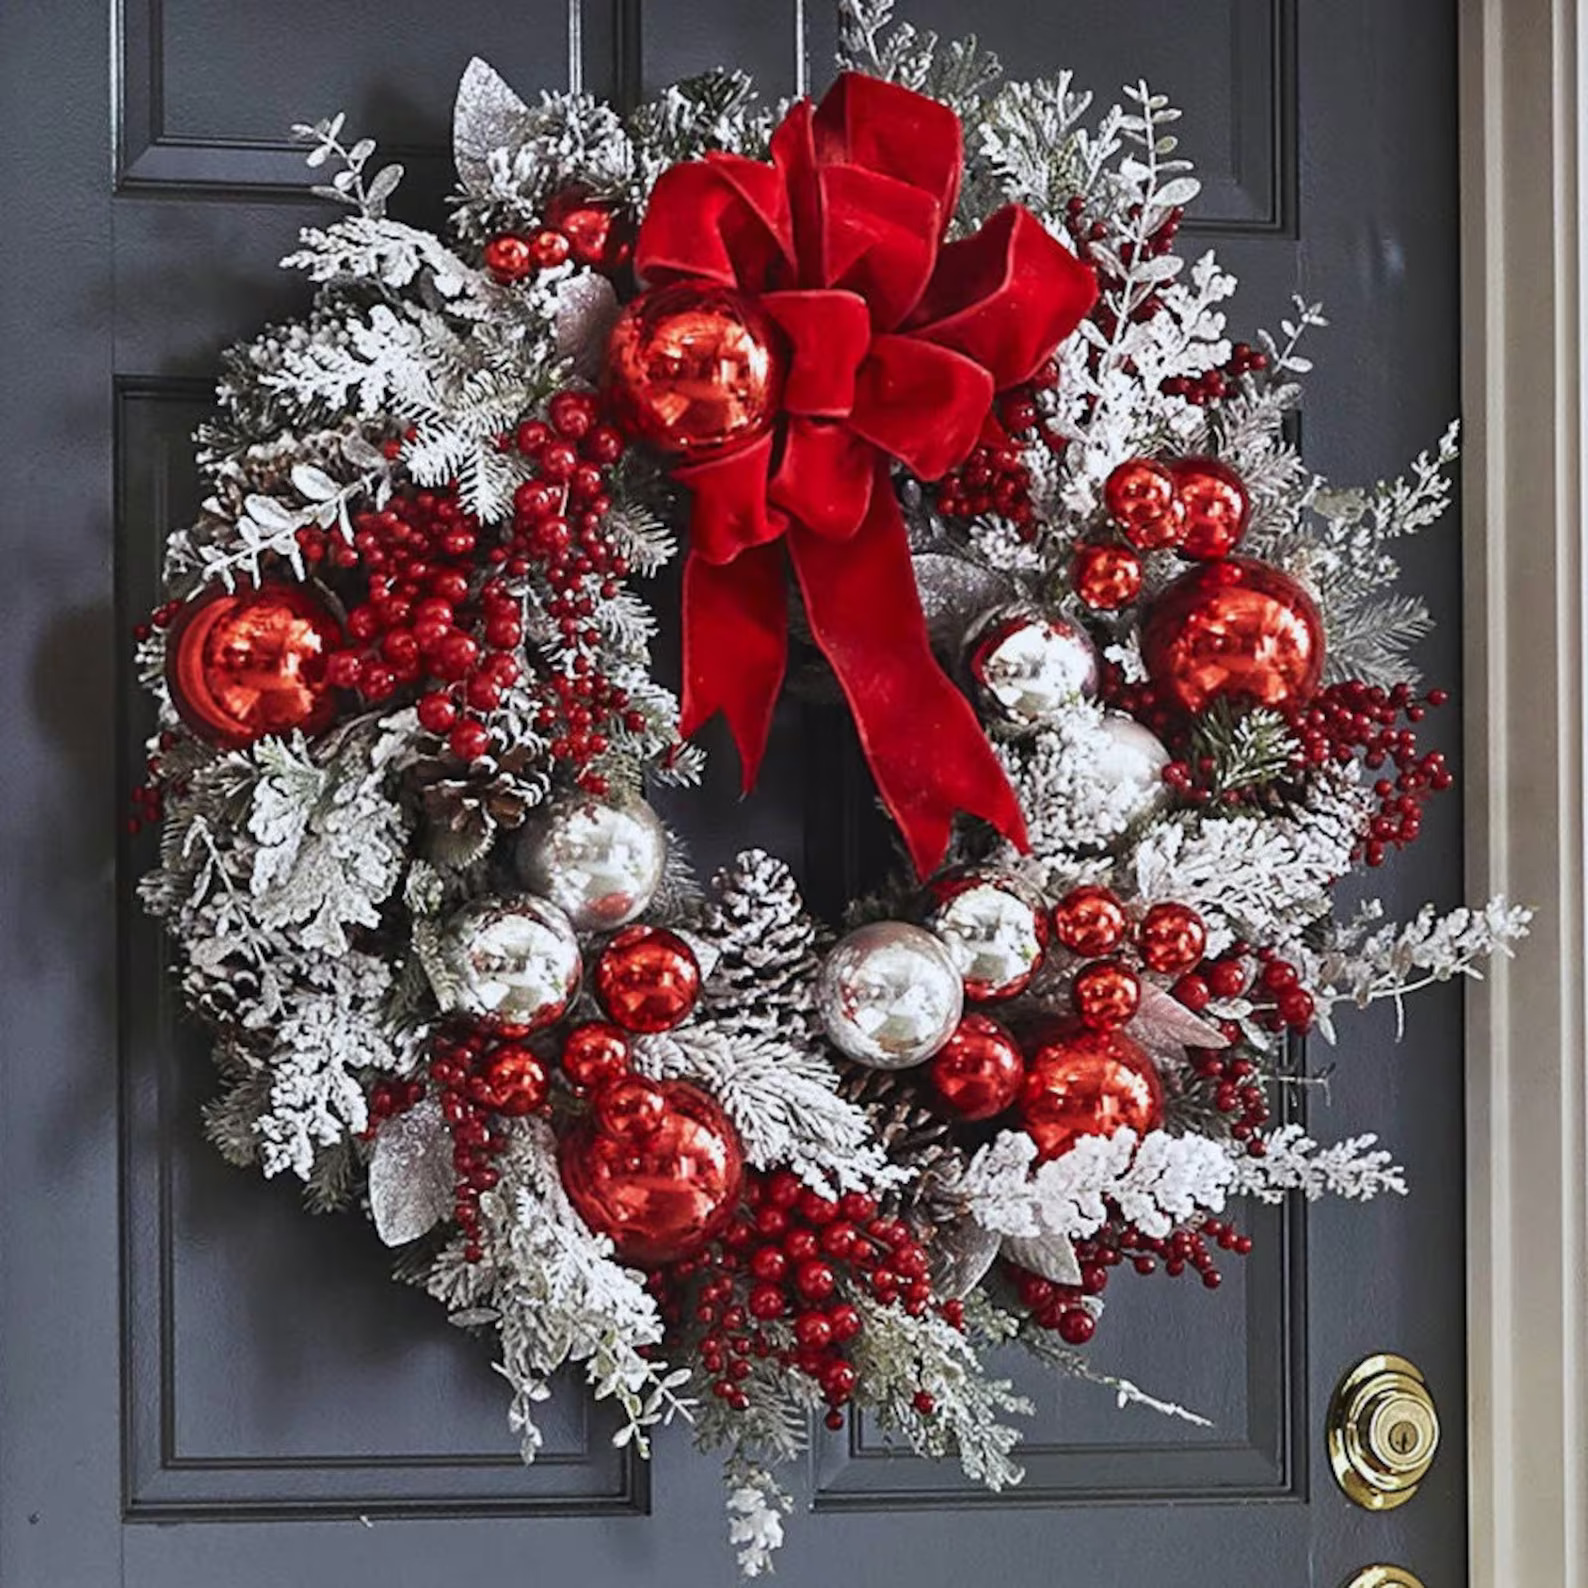 18 Wonderful Christmas Wreath Designs You Should Consider Now